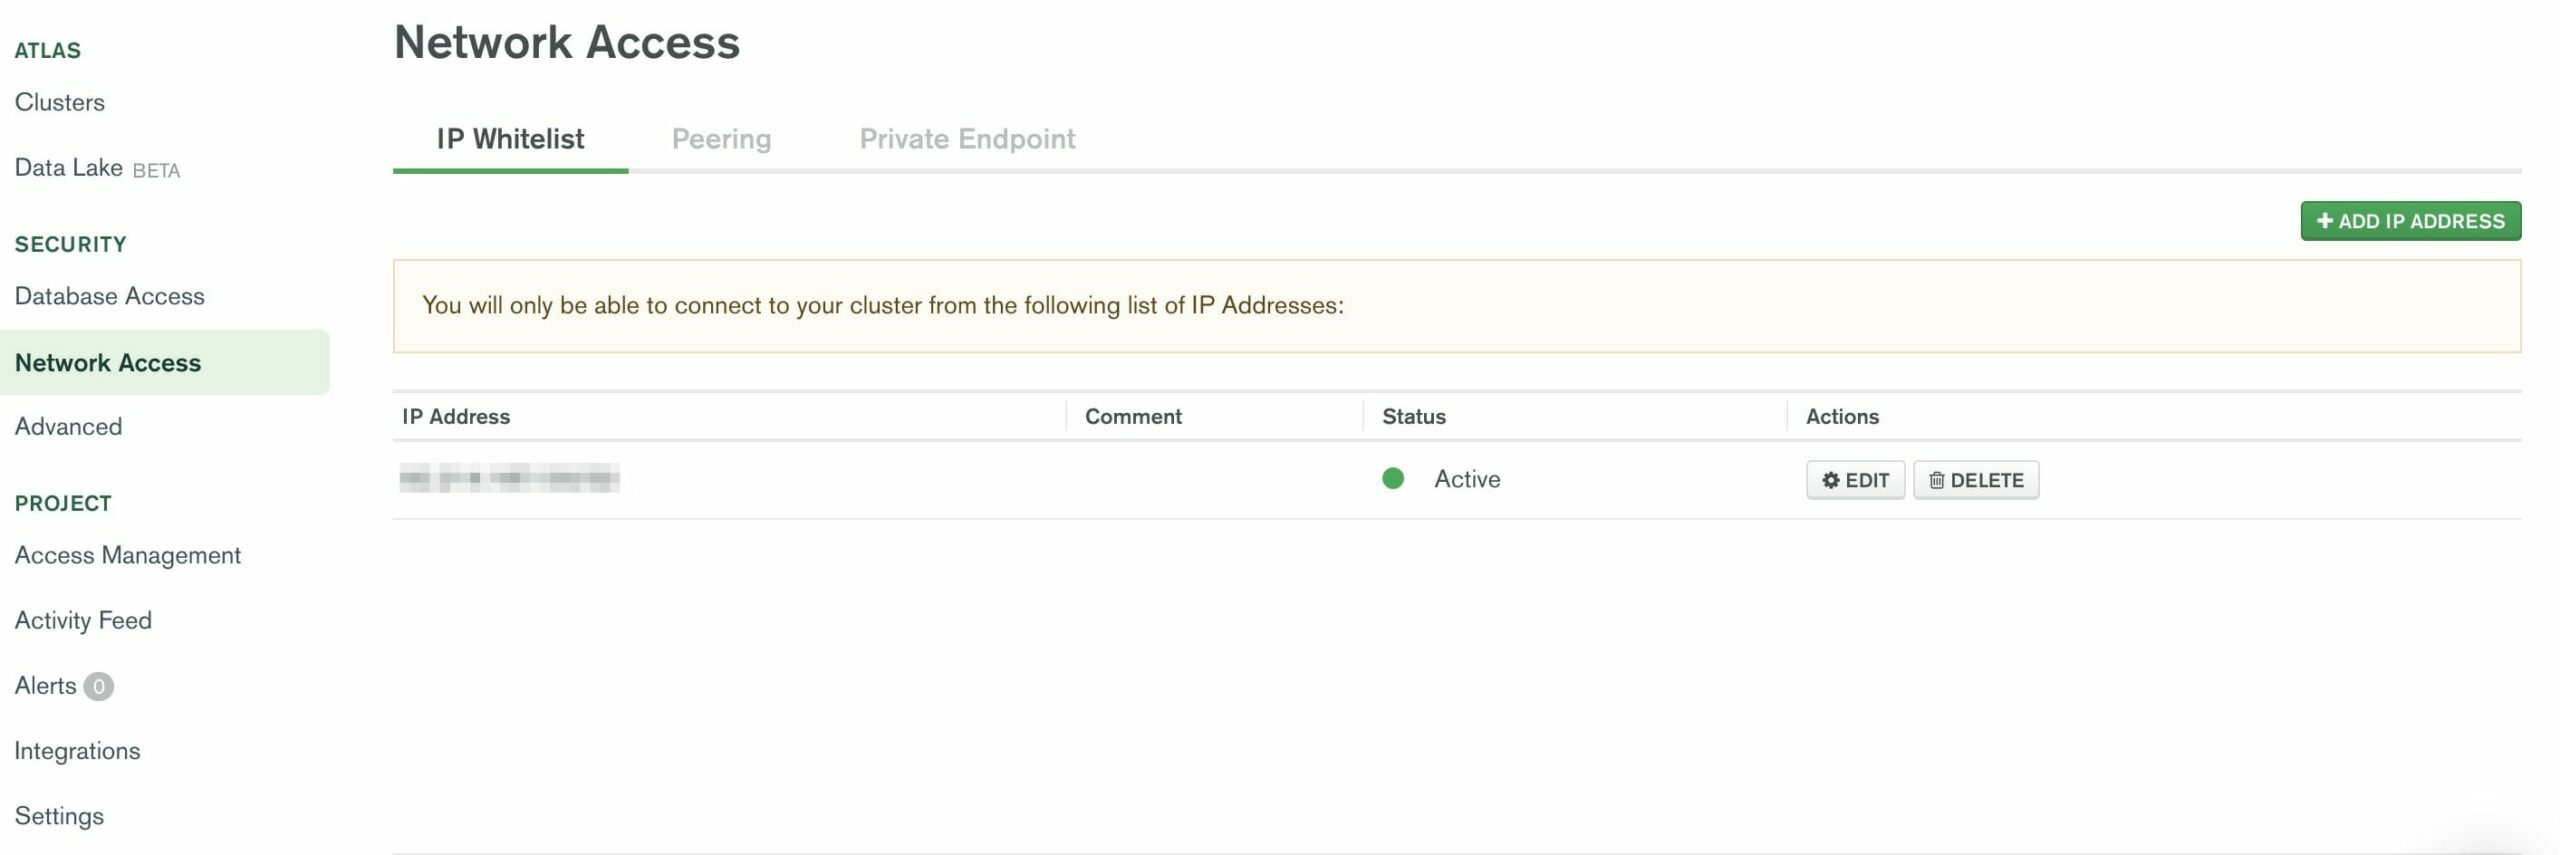 Is my IP address safe on Discord? - Quora